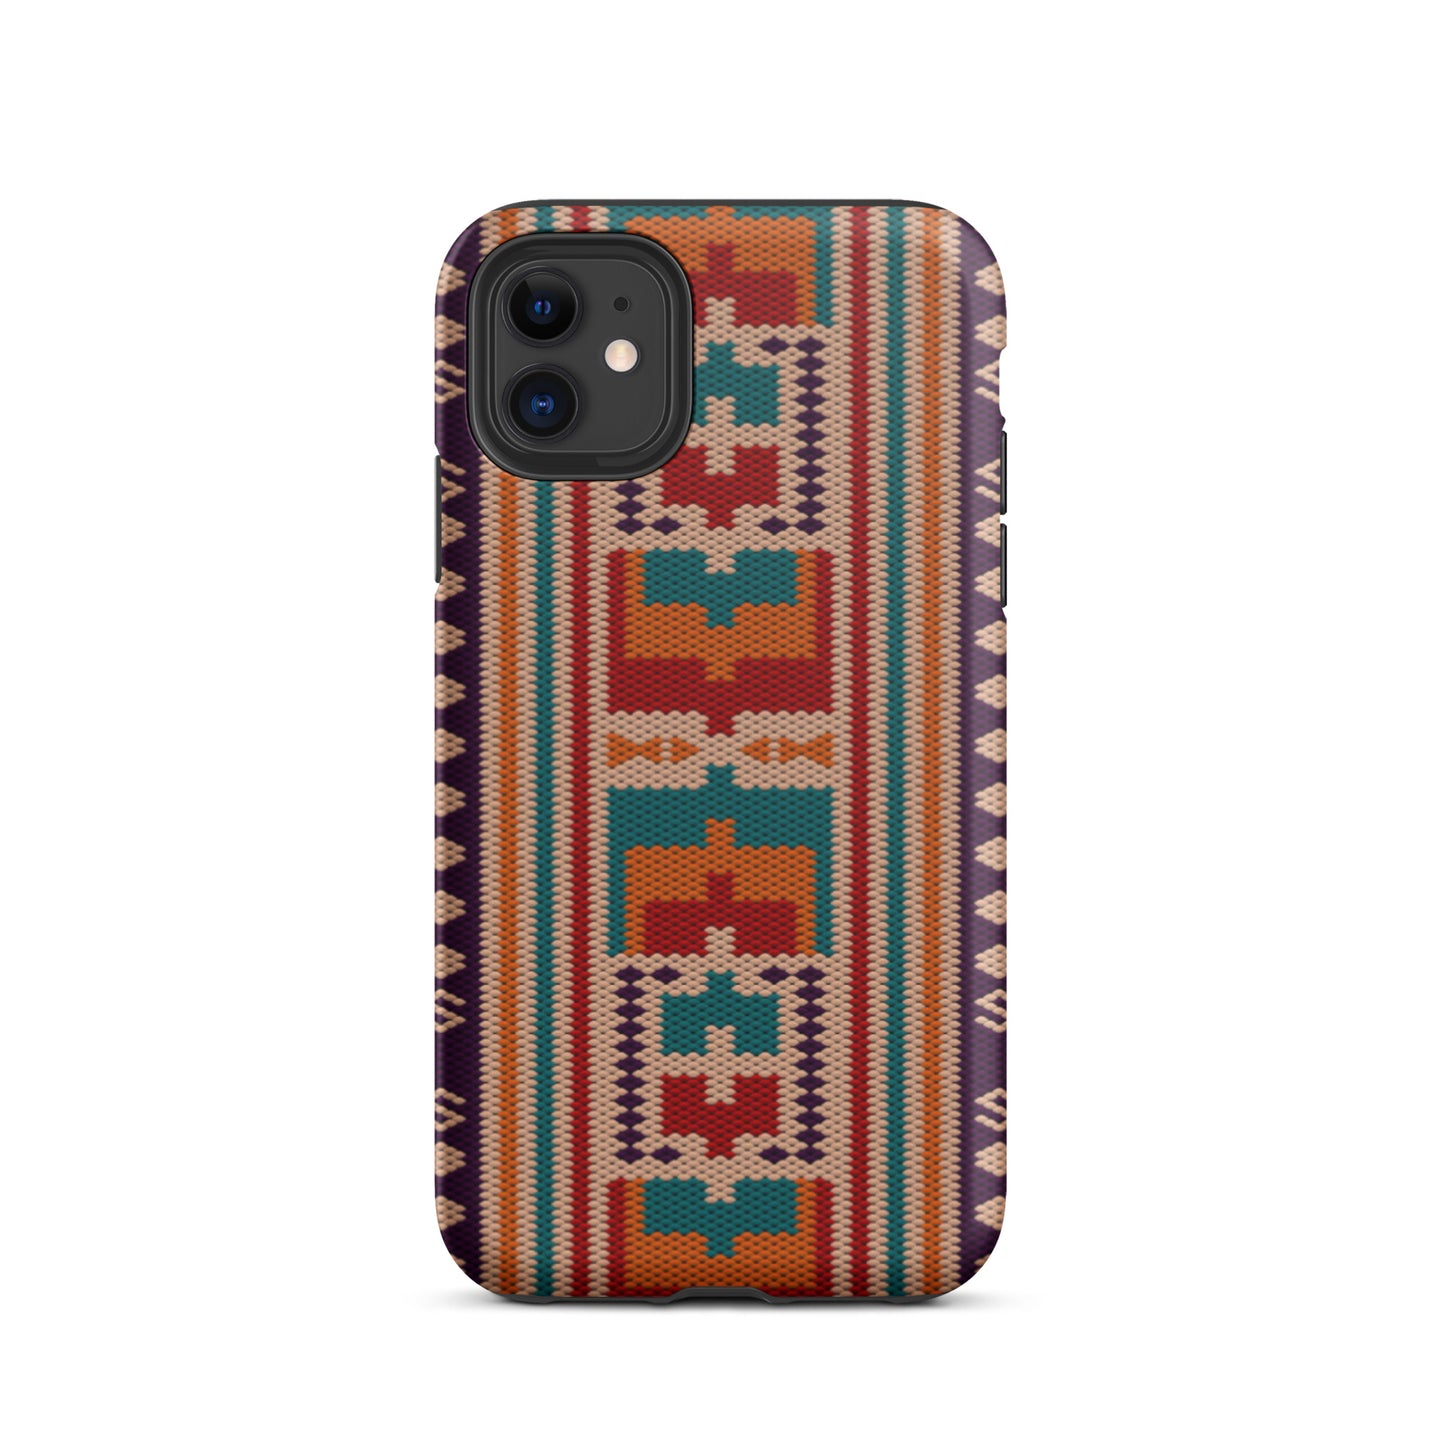 Navajo Tough iPhone 11 case